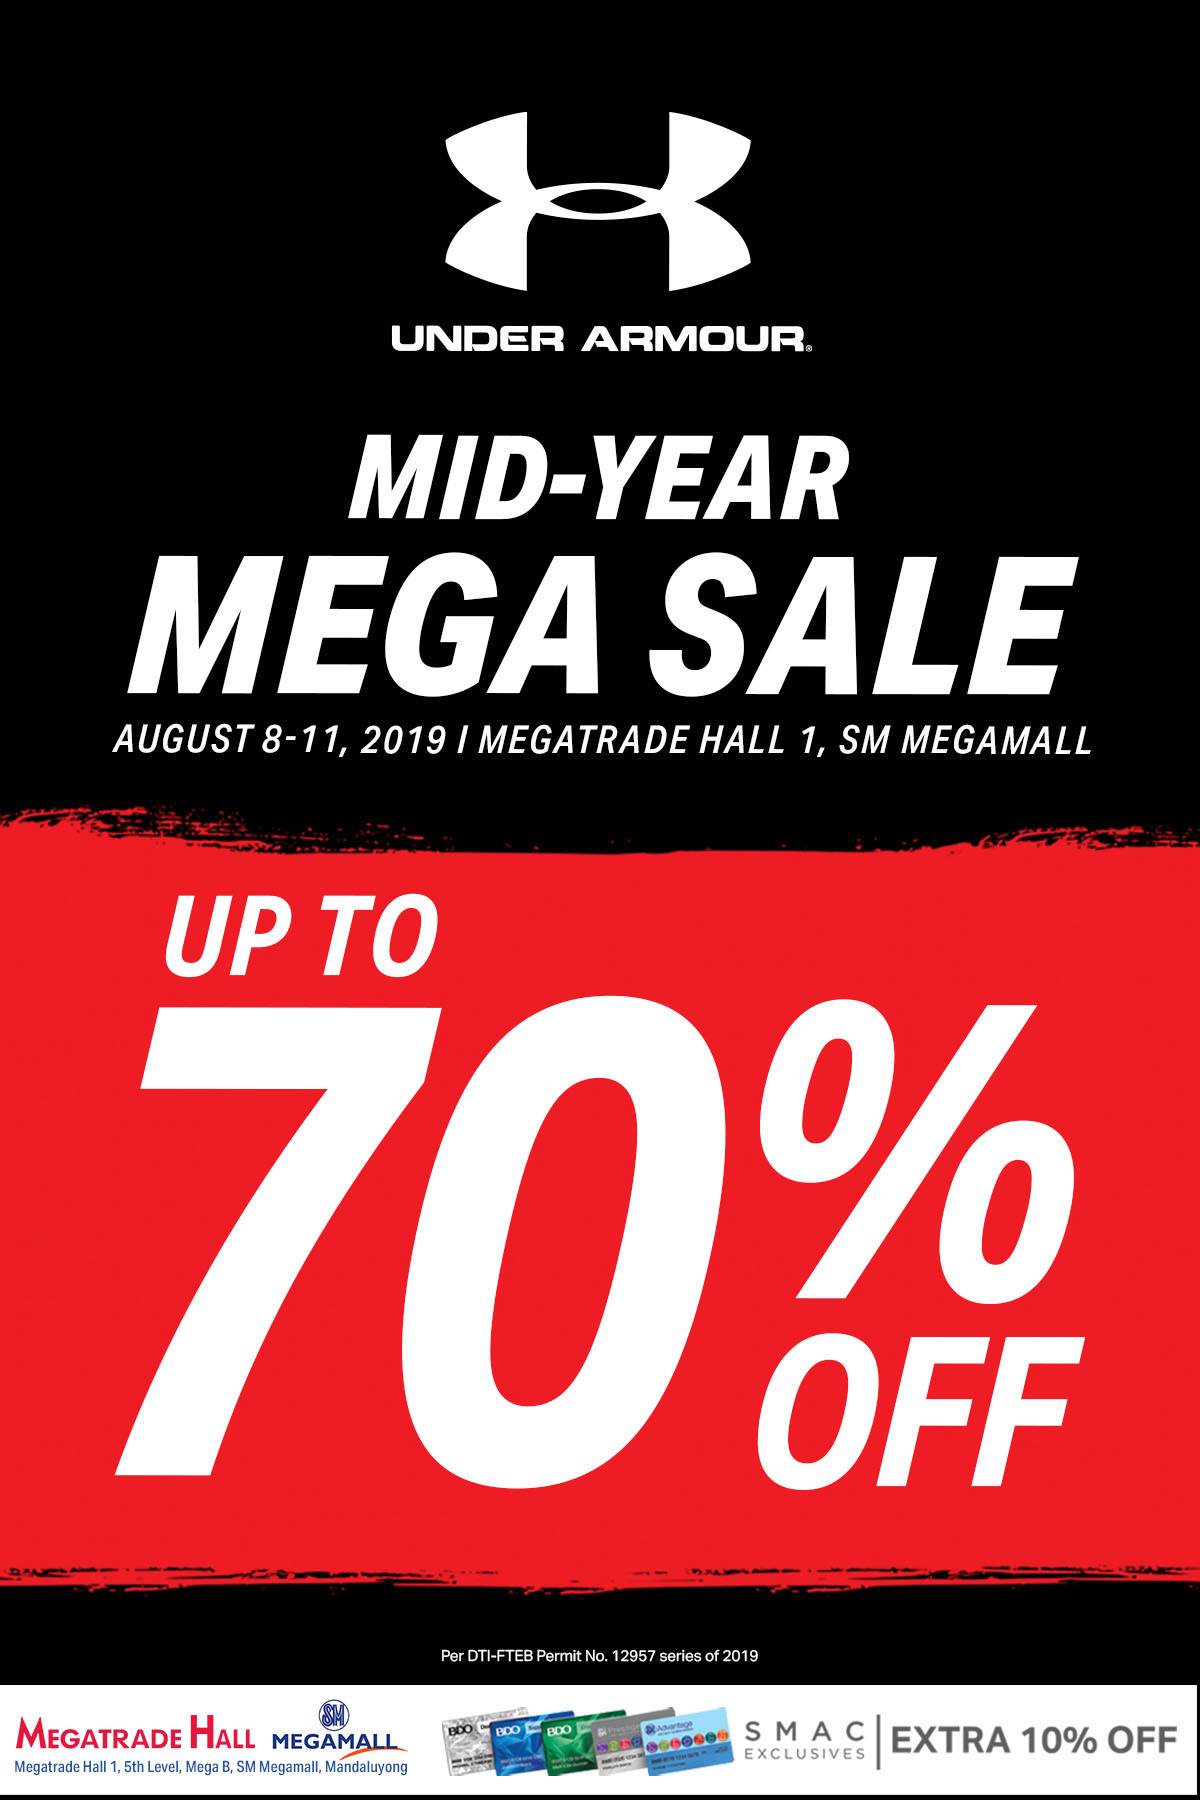 Under Armour Mid-Year Mega Sale - August 8-11, 2019